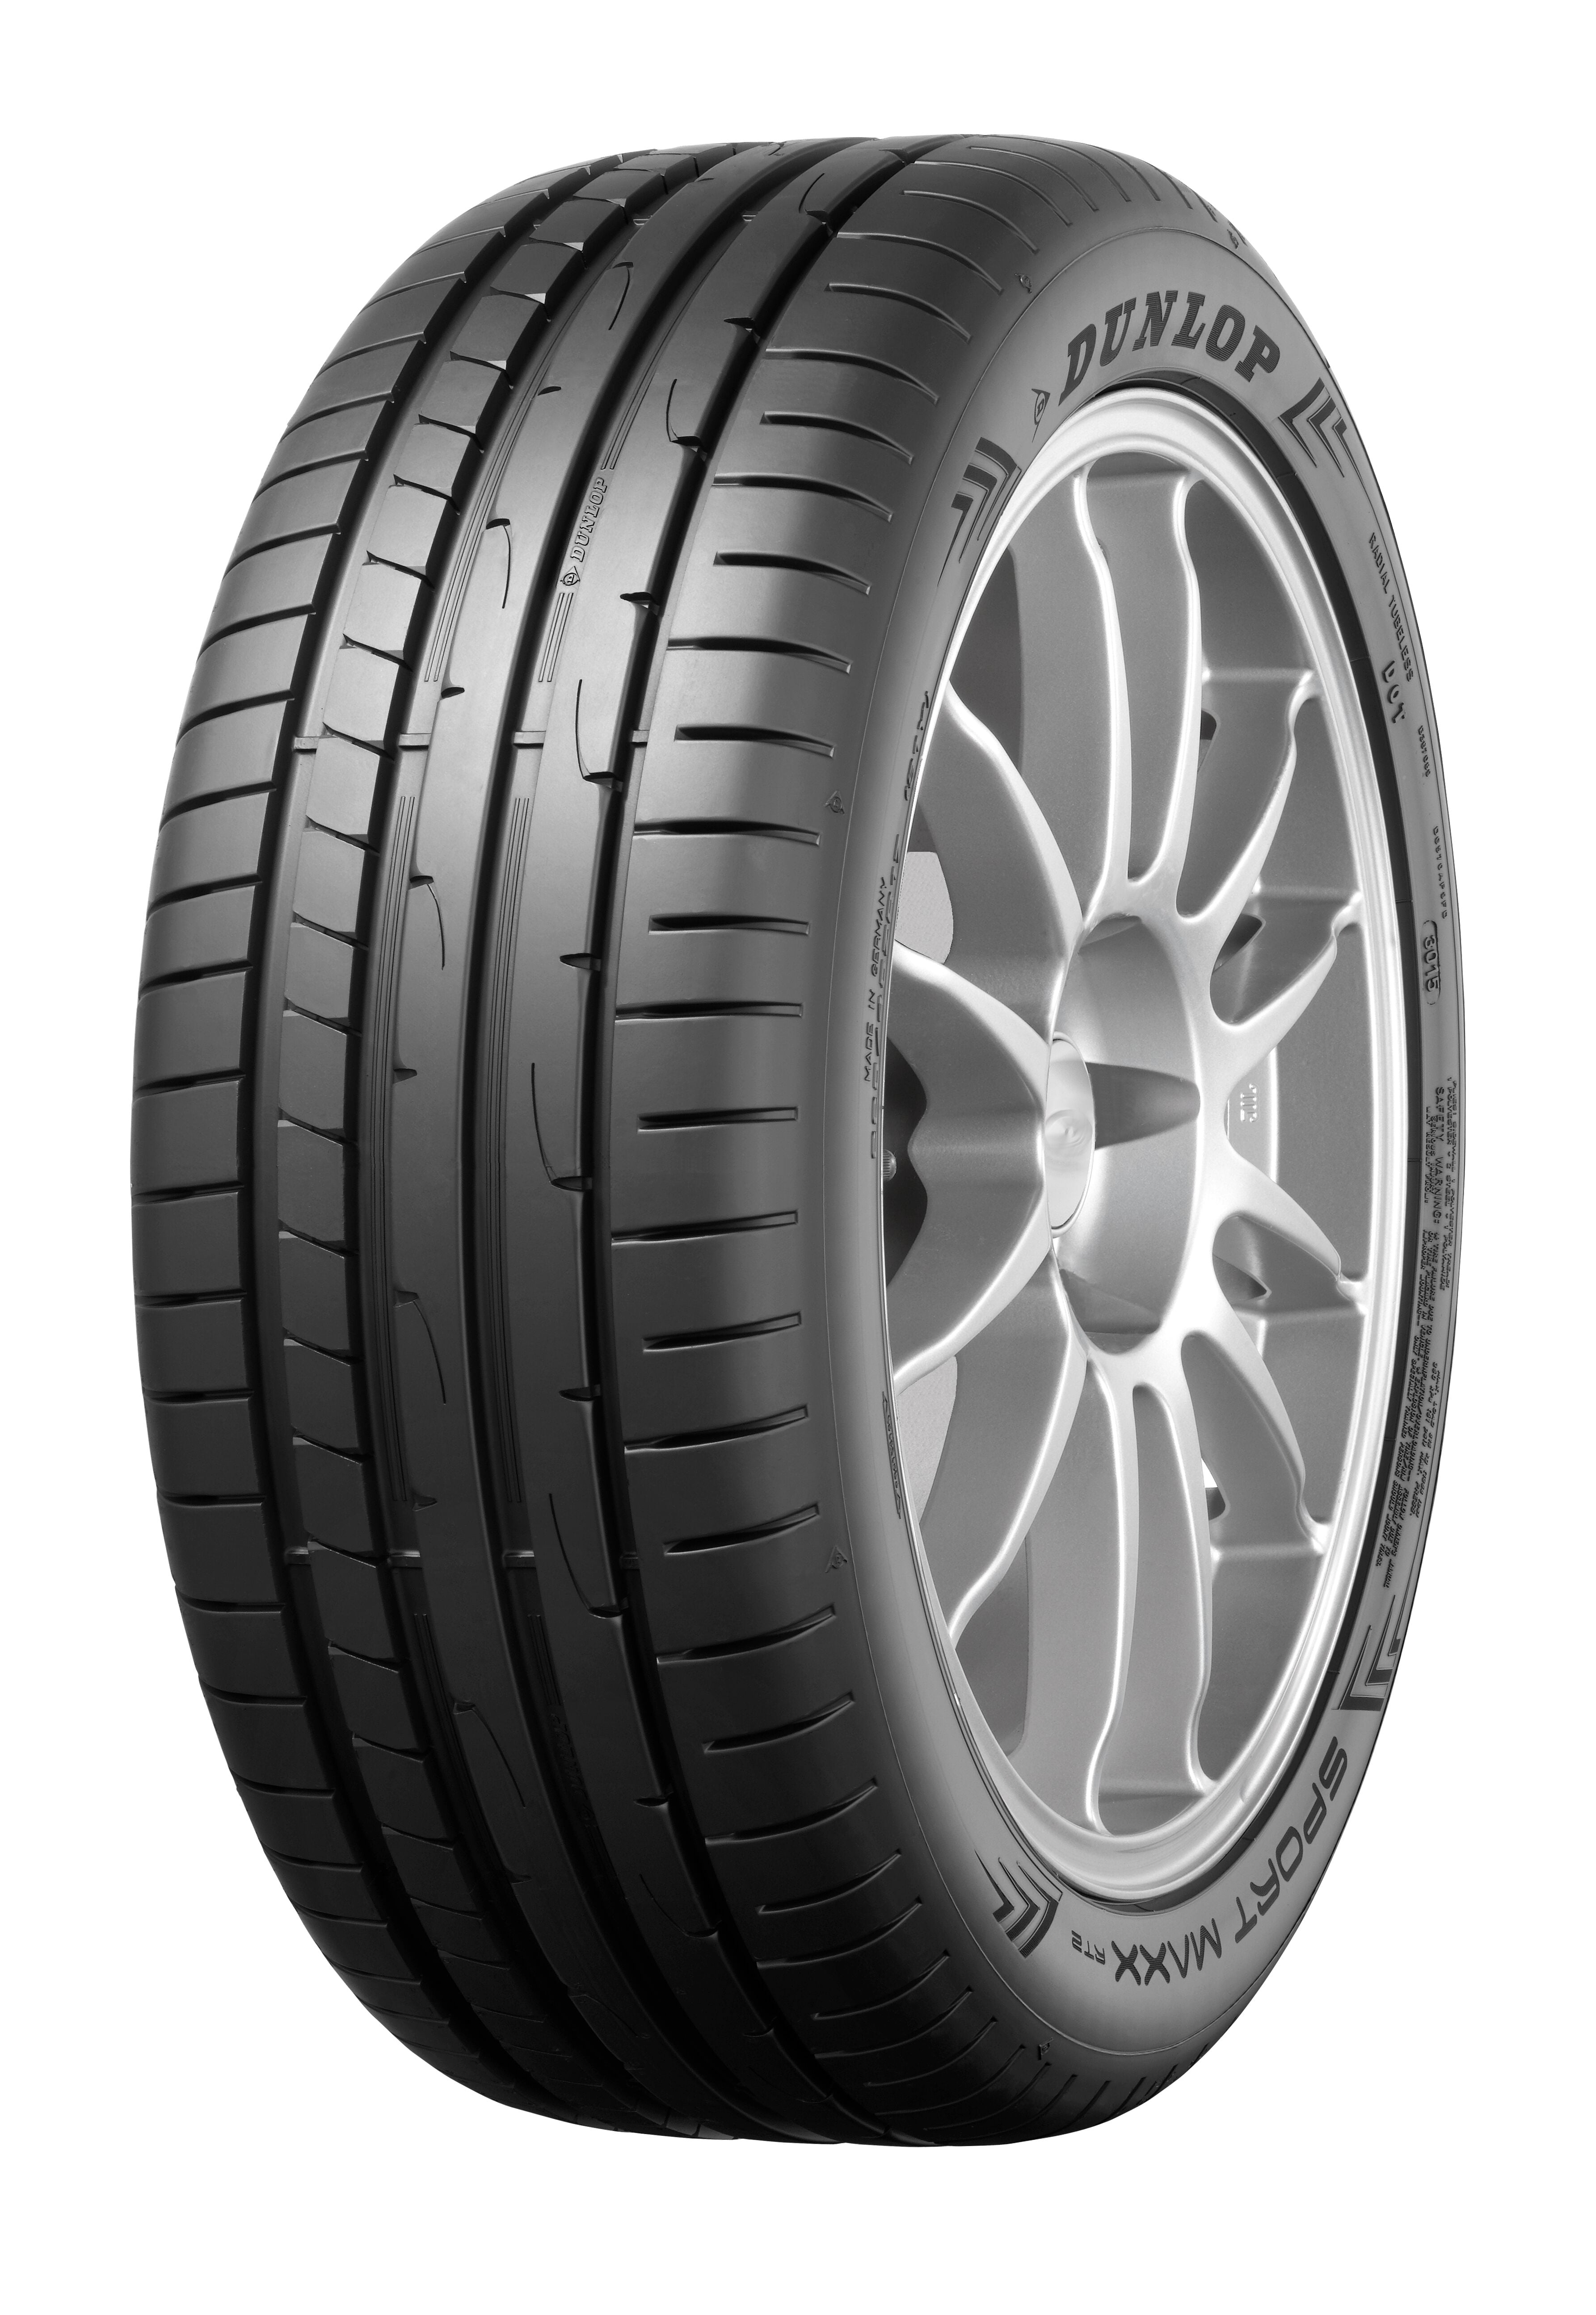 Dunlop Sport Maxx Rt2 265/35ZR18 97Y Performance Tire